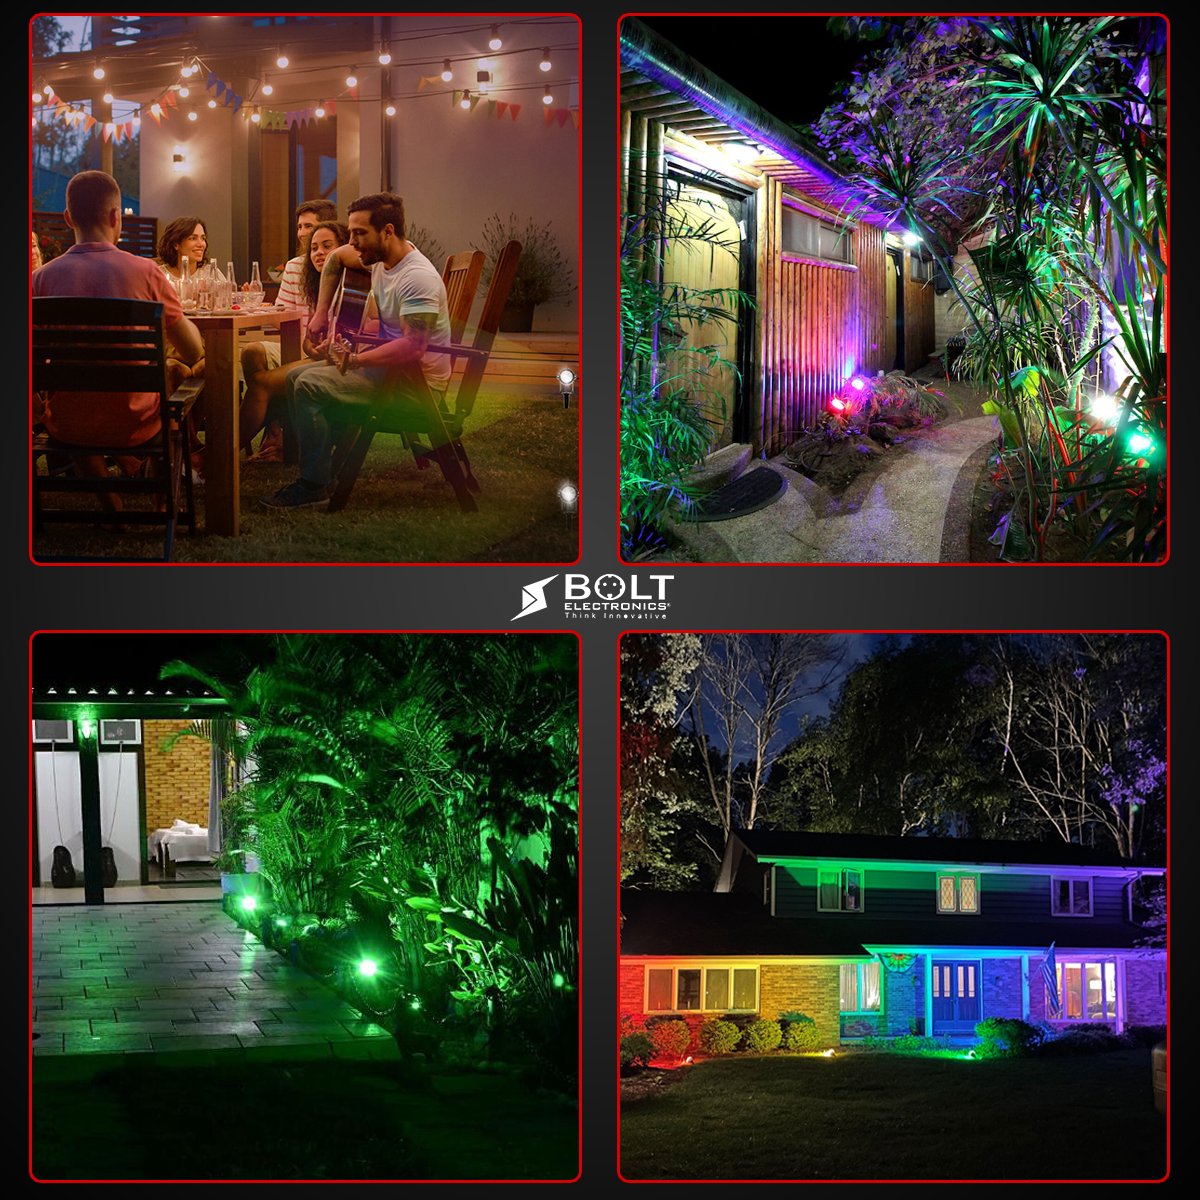 Bolt Electronics®️ RGB LED tuinverlichting Prikspot buitenlamp 3 stuks